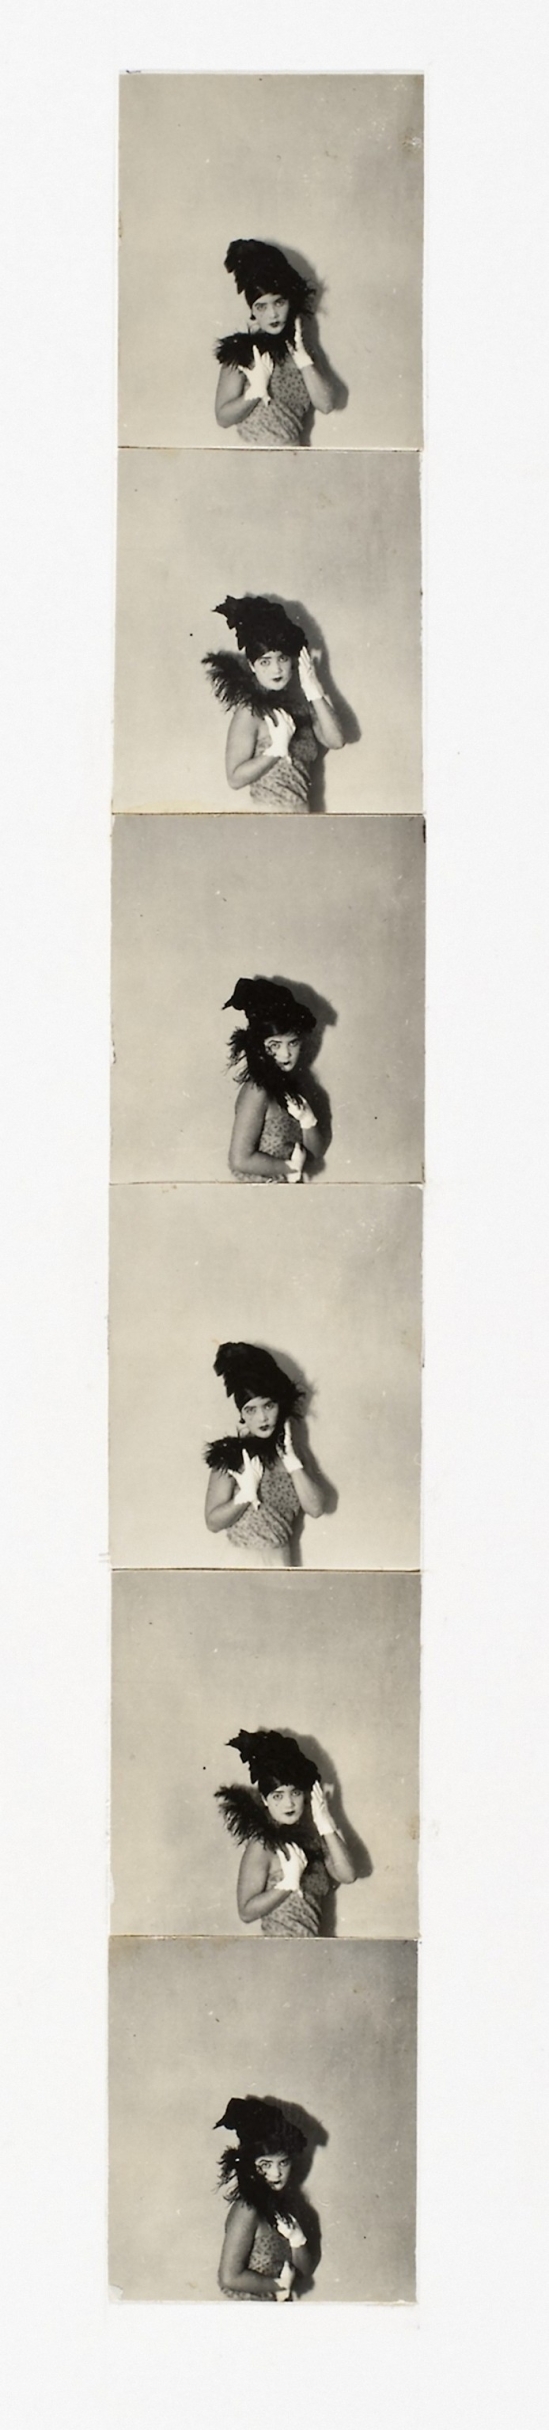 Renata Bracksieck - Self-Portrait, 1920 